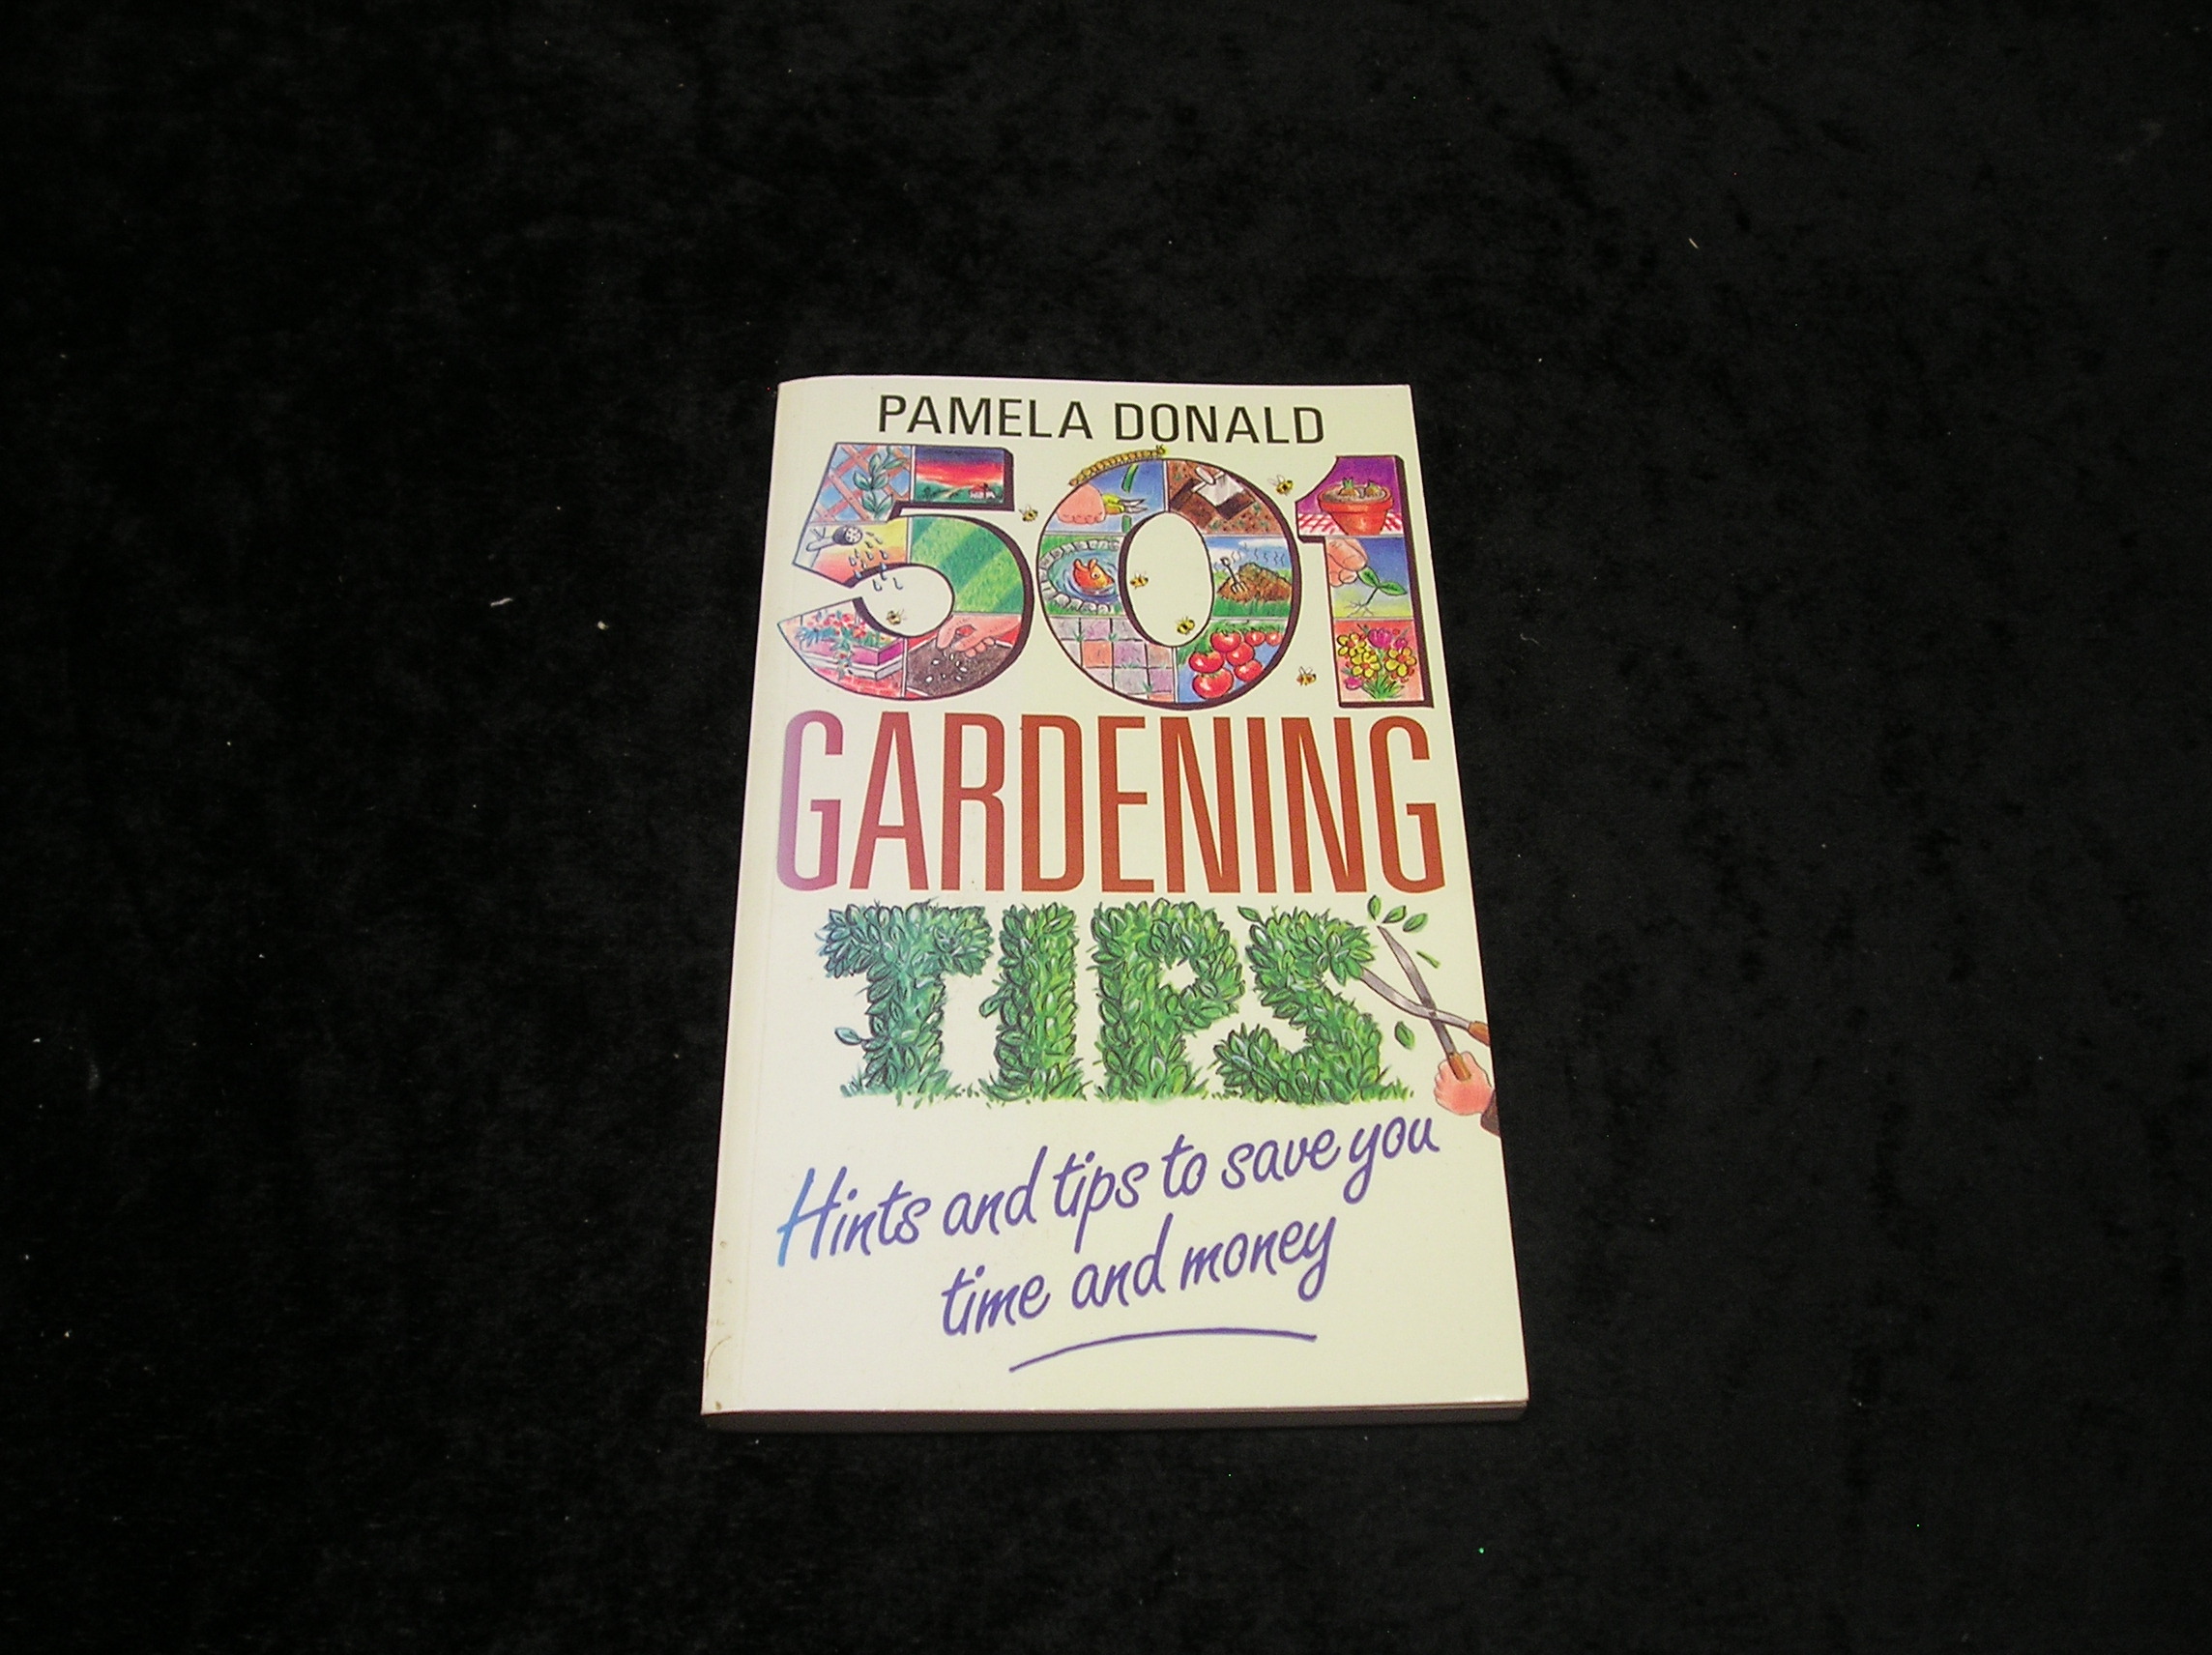 501 Gardening tips